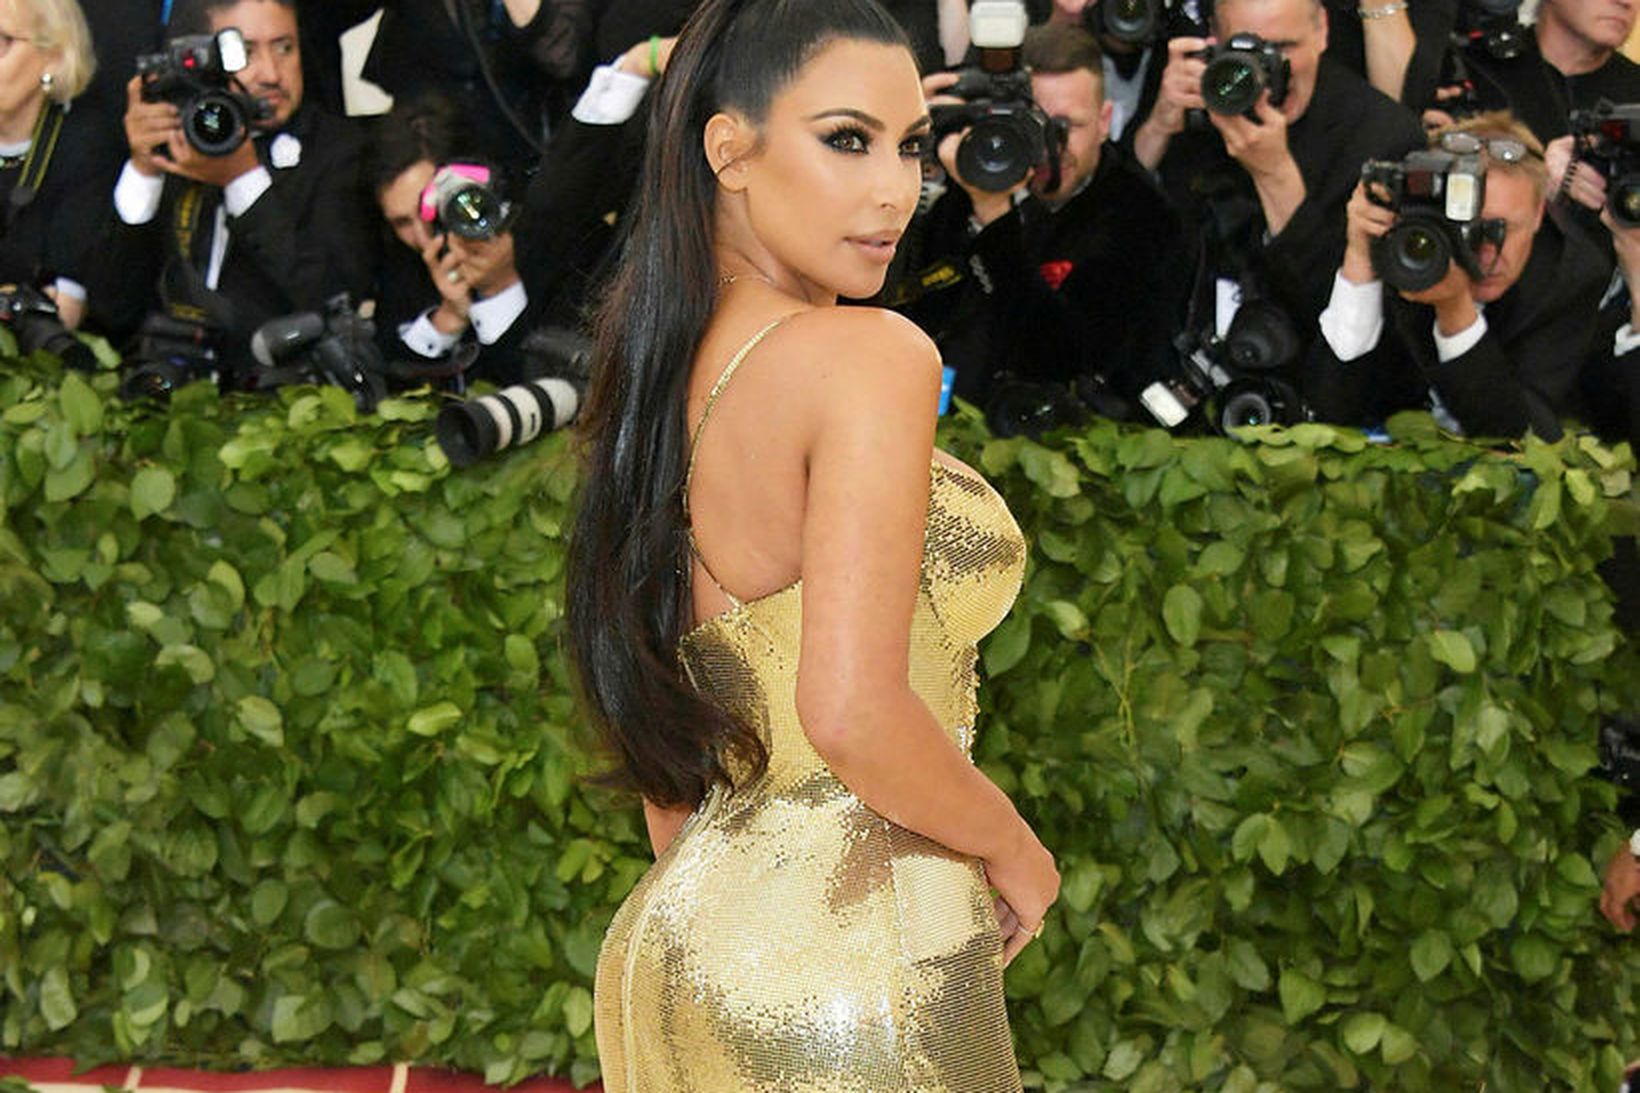 Afturendi Kim Kardashian vekur jafnan mikla athygli.